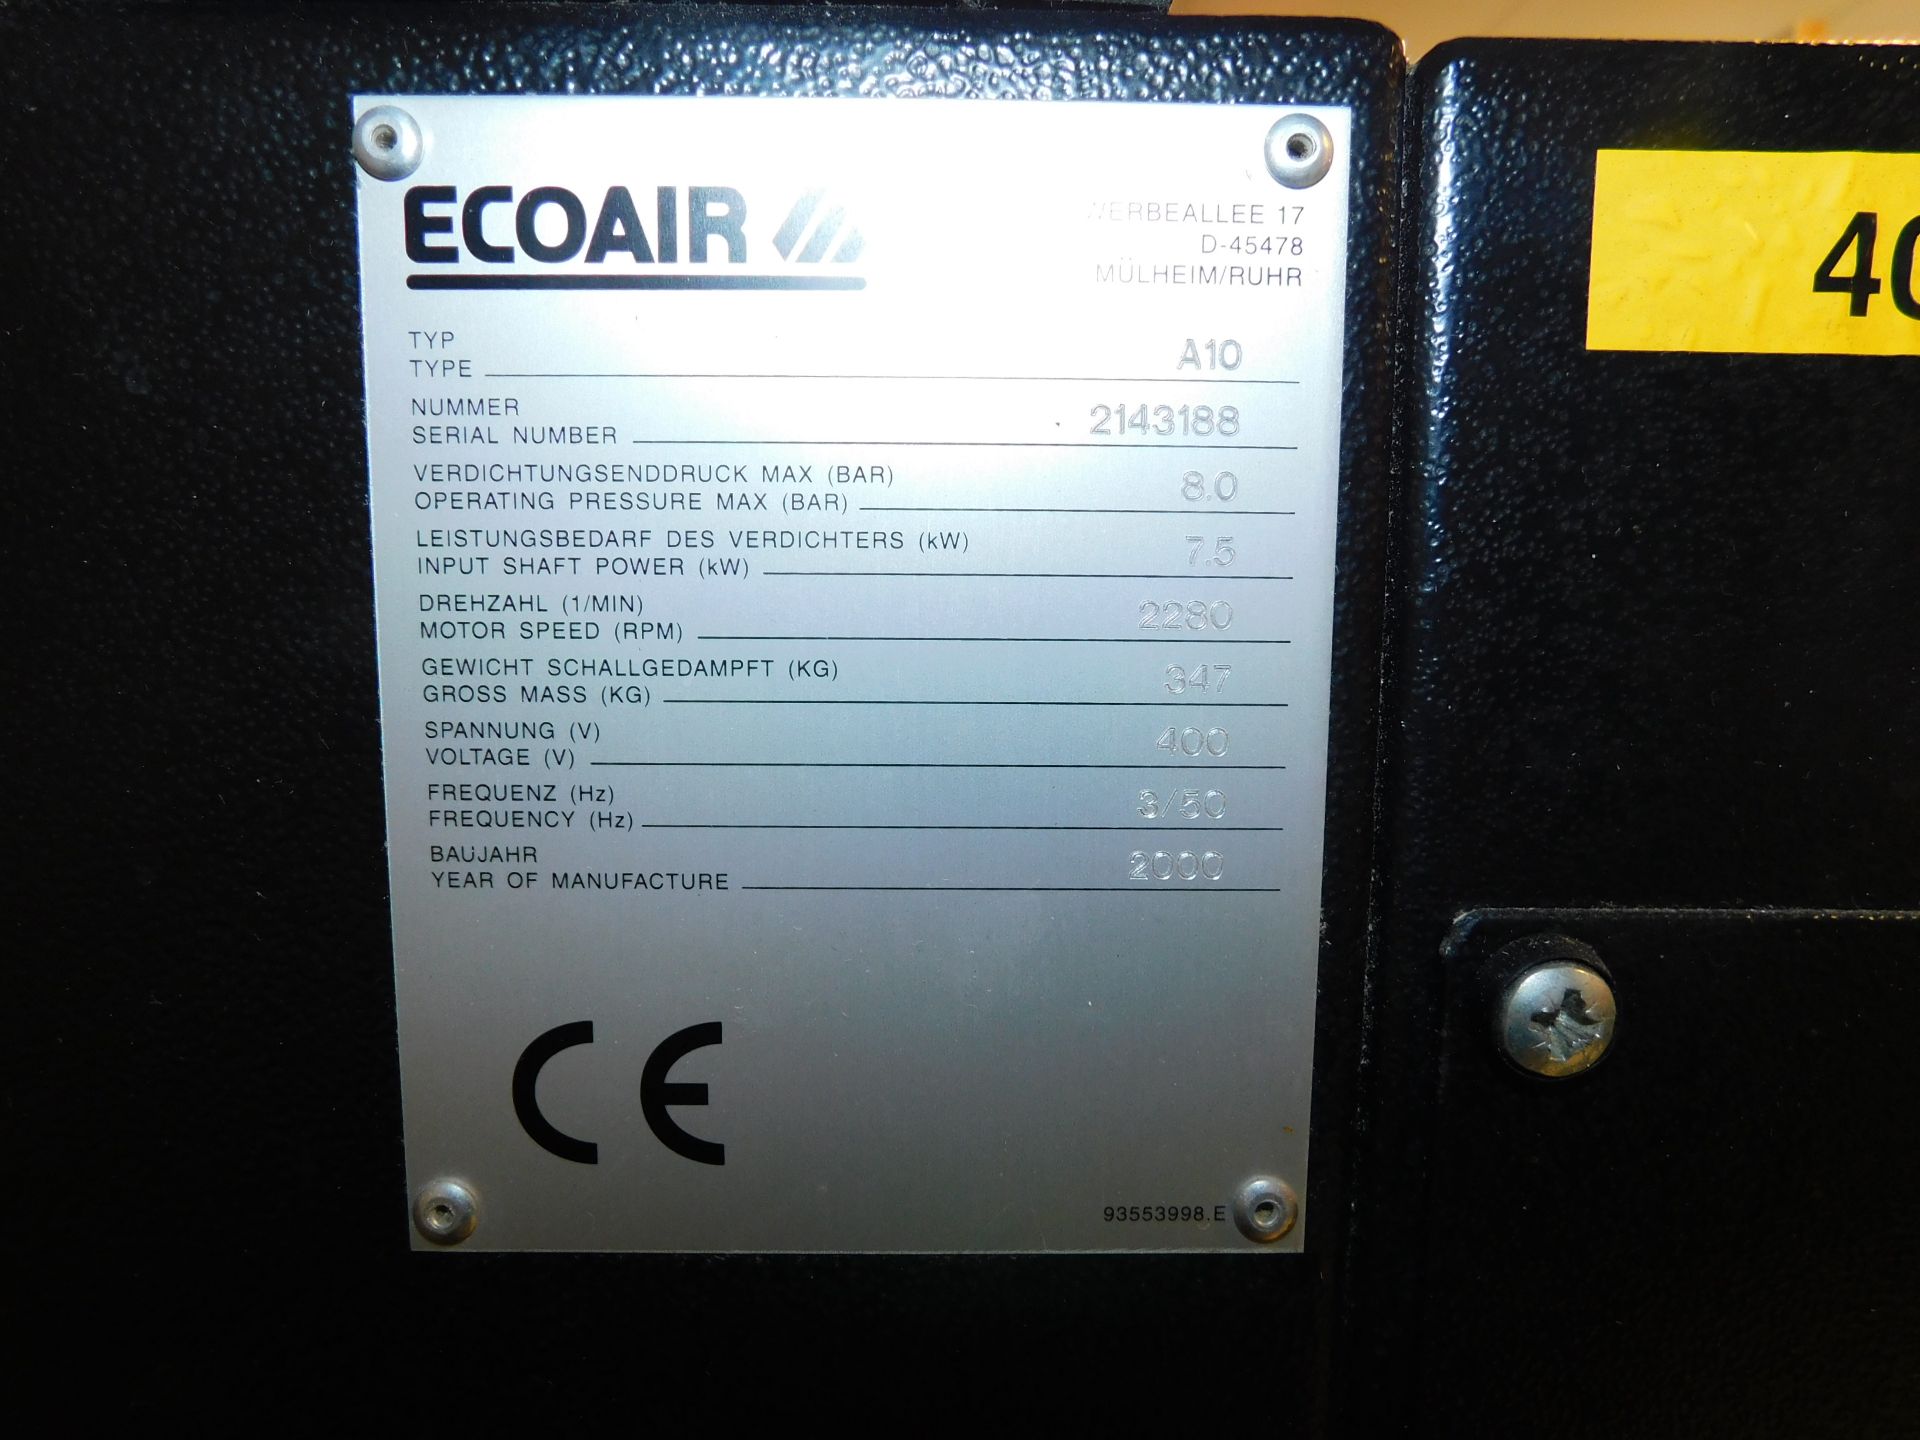 Ecoair A10 Receiver Mounted Silenced Air Compressor, Serial No 2143186 (2000) 8 Bar Max Pressure ( - Image 4 of 4